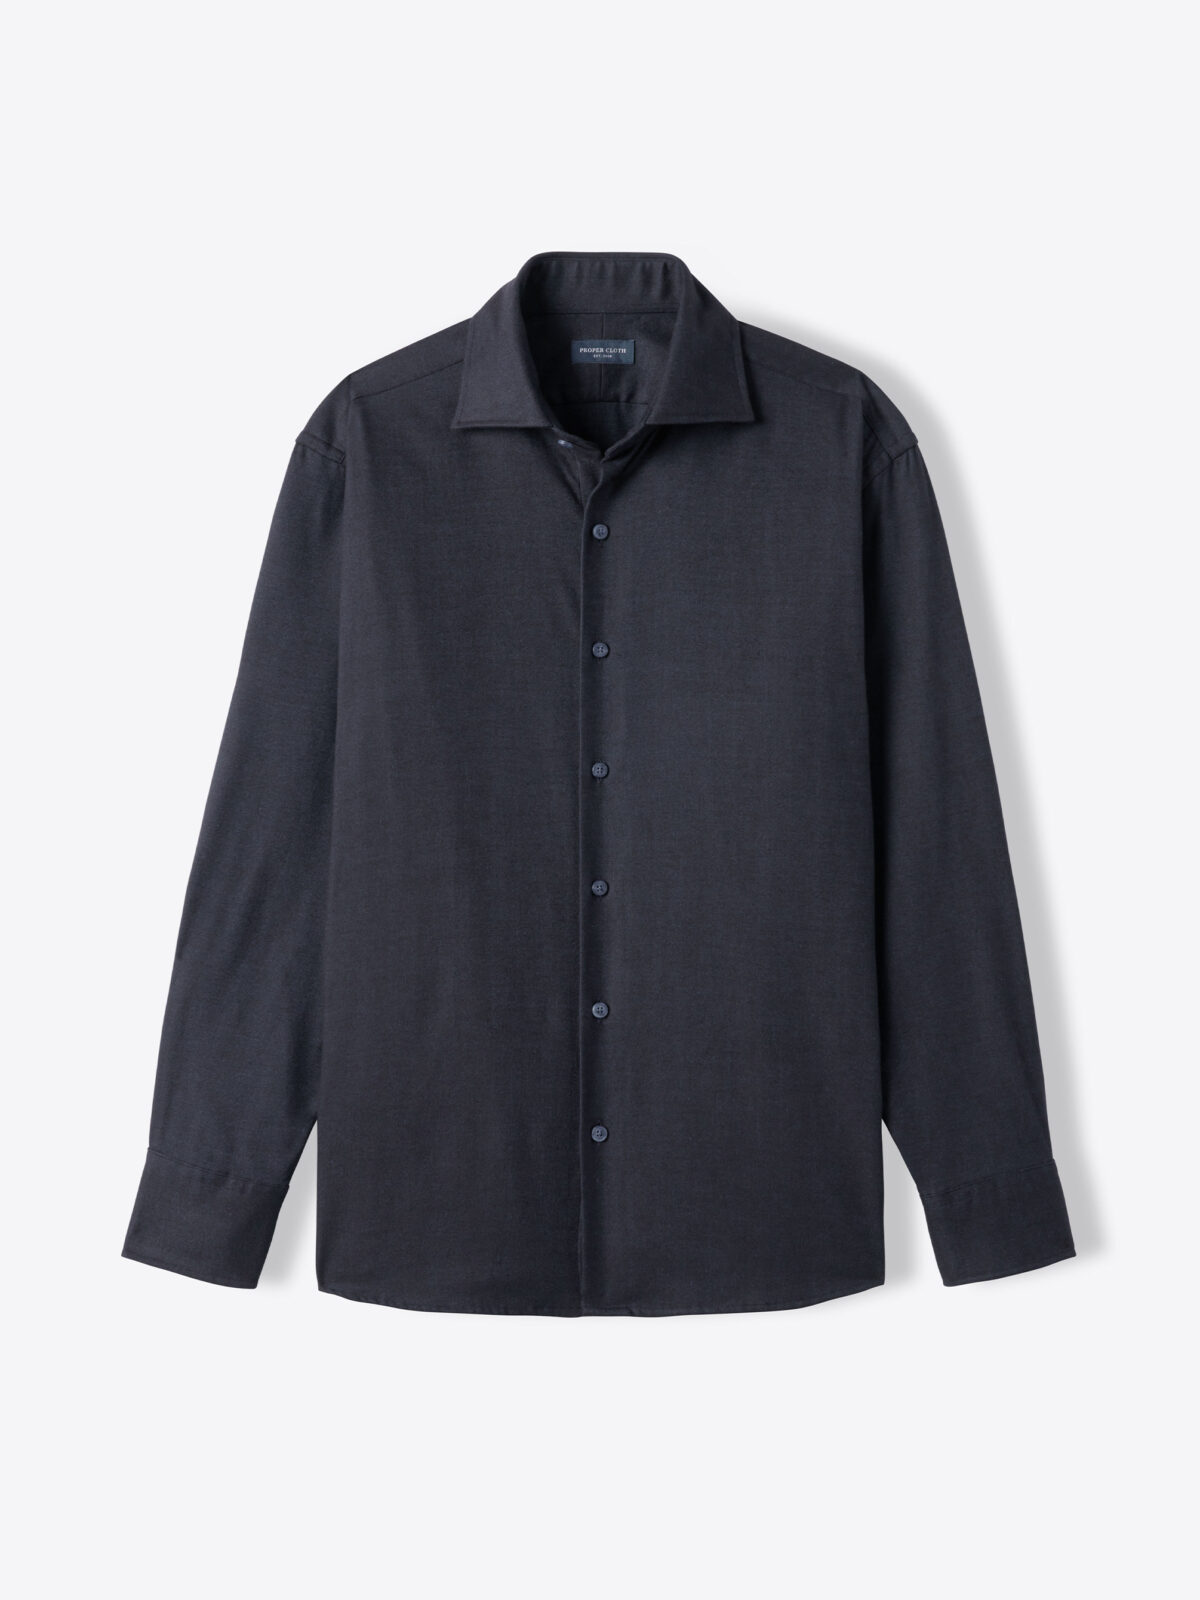 Albini Navy Cotton Tencel Herringbone Flannel Shirt by Proper Cloth